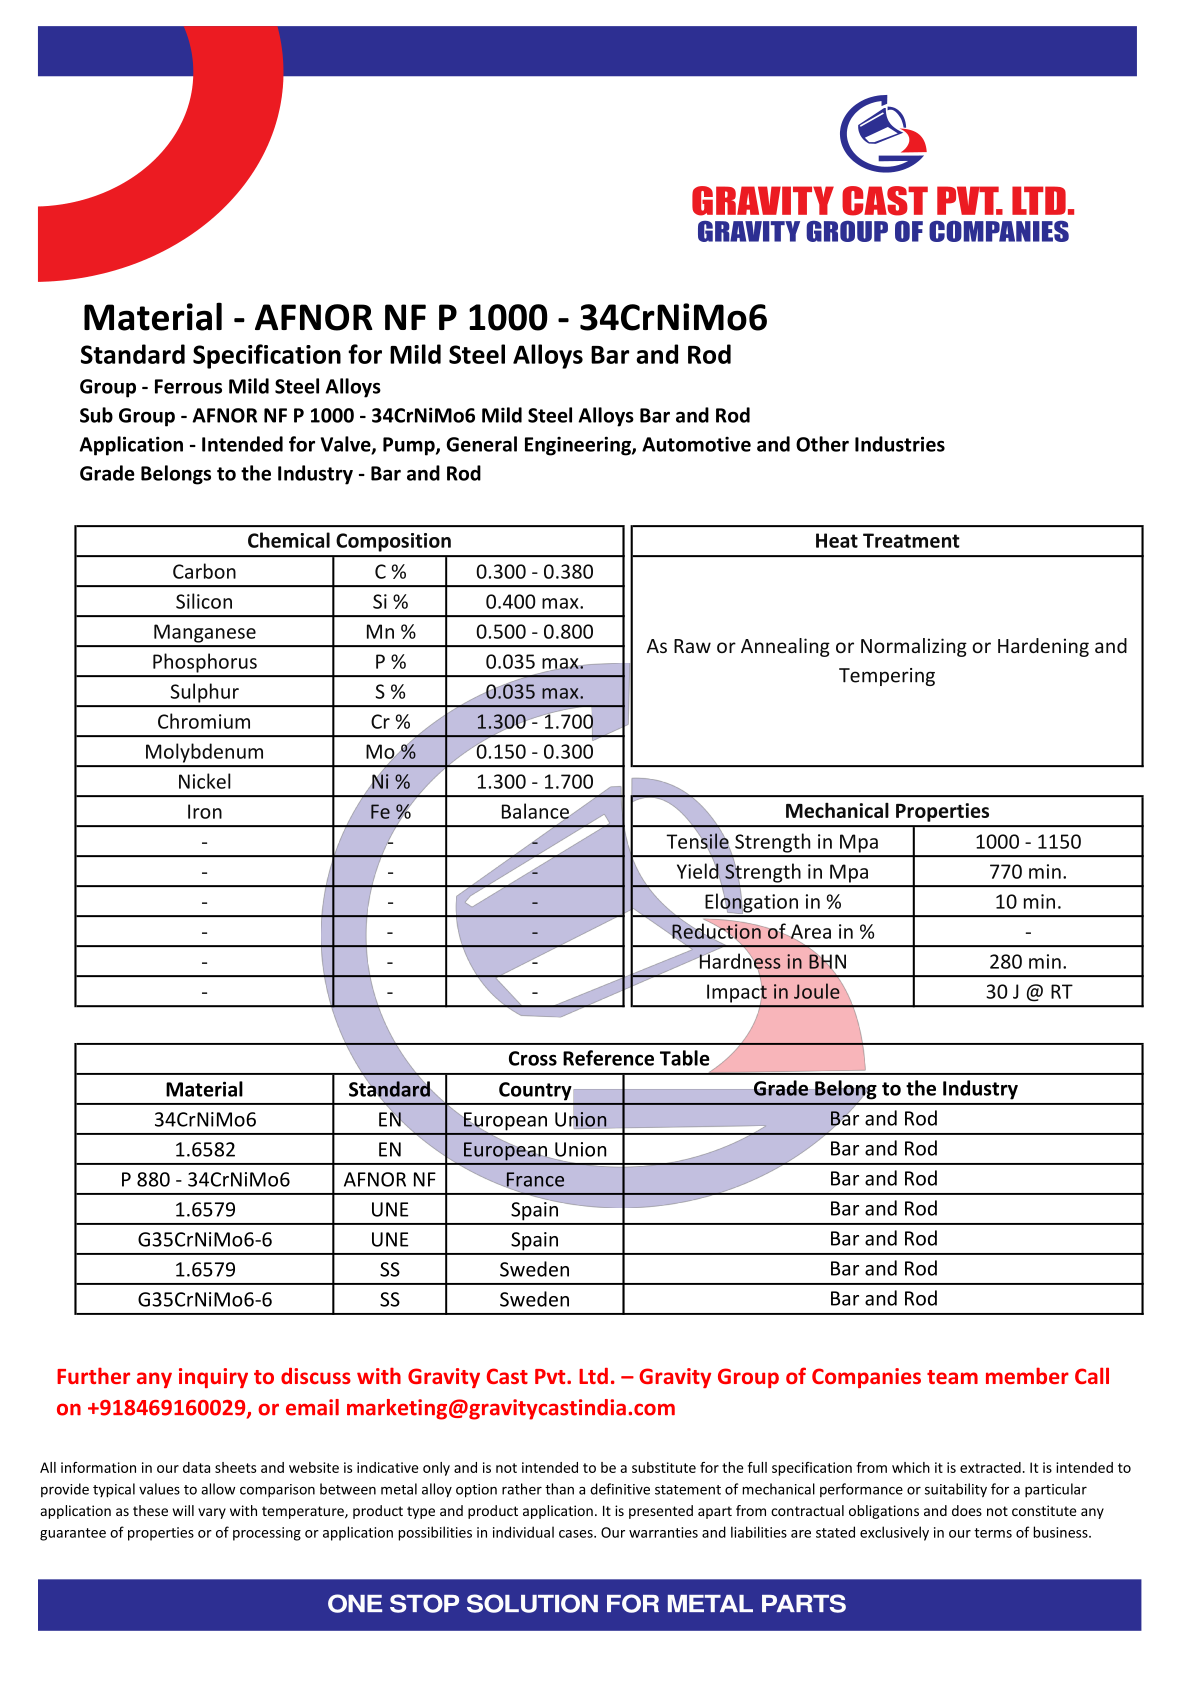 AFNOR NF P 1000 - 34CrNiMo6.pdf